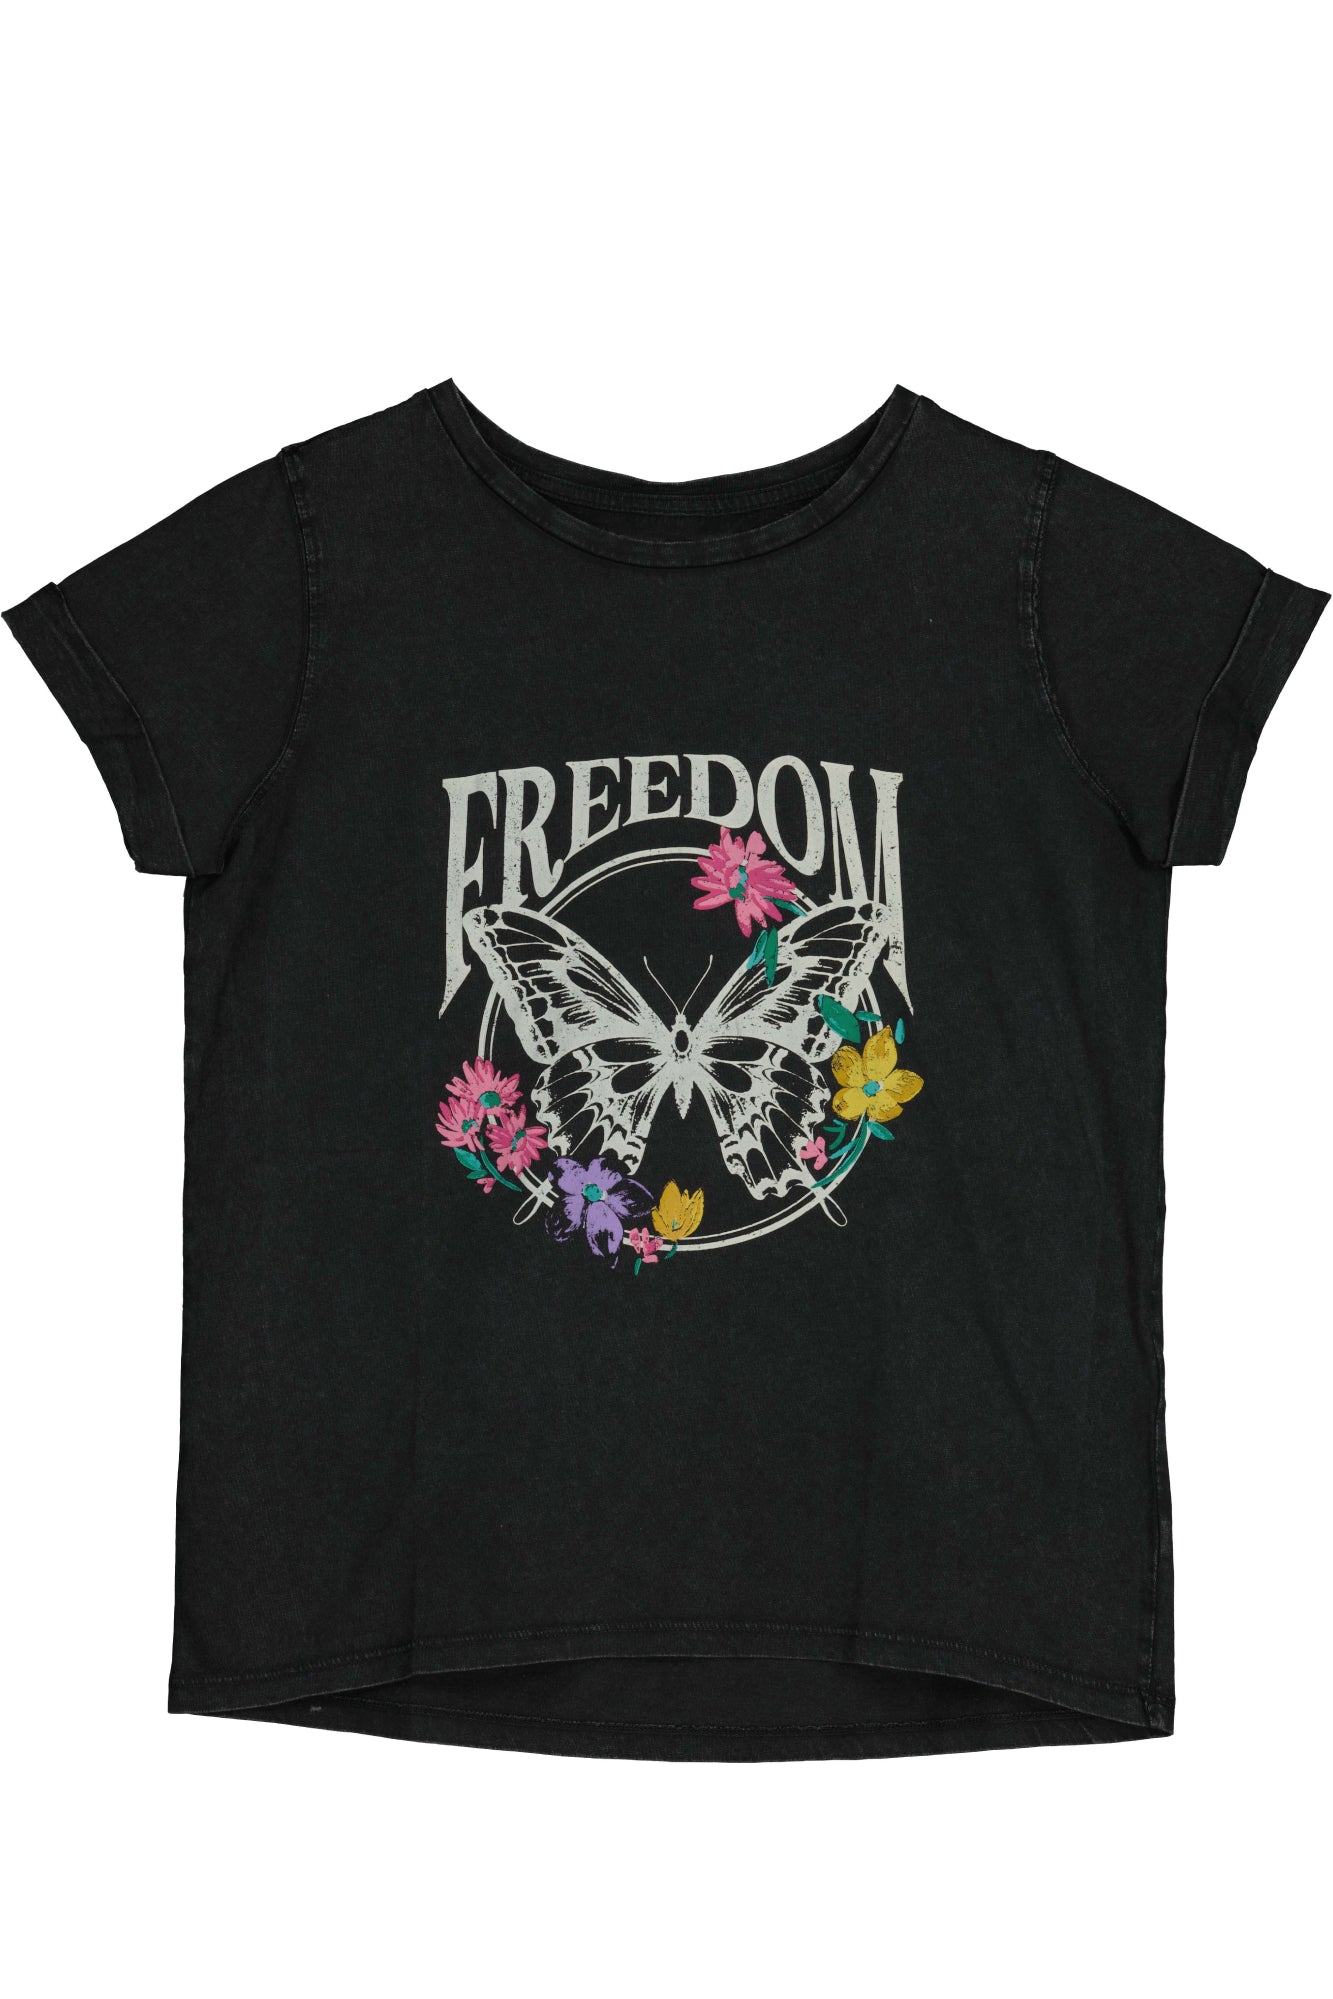 "Freedom" T-shirt